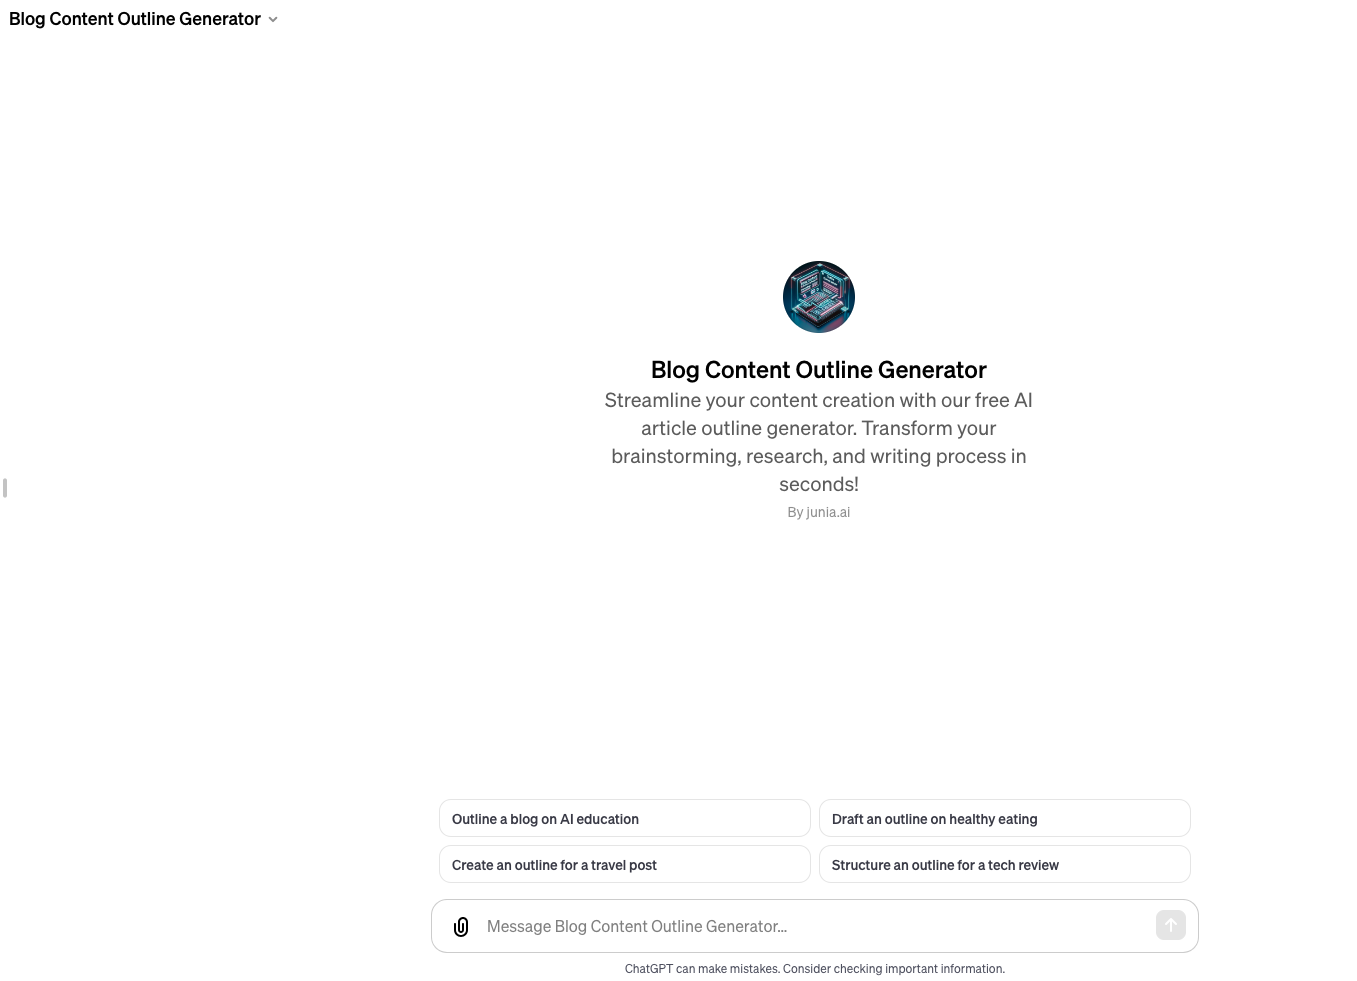 Blog Content Outline Generator GPT